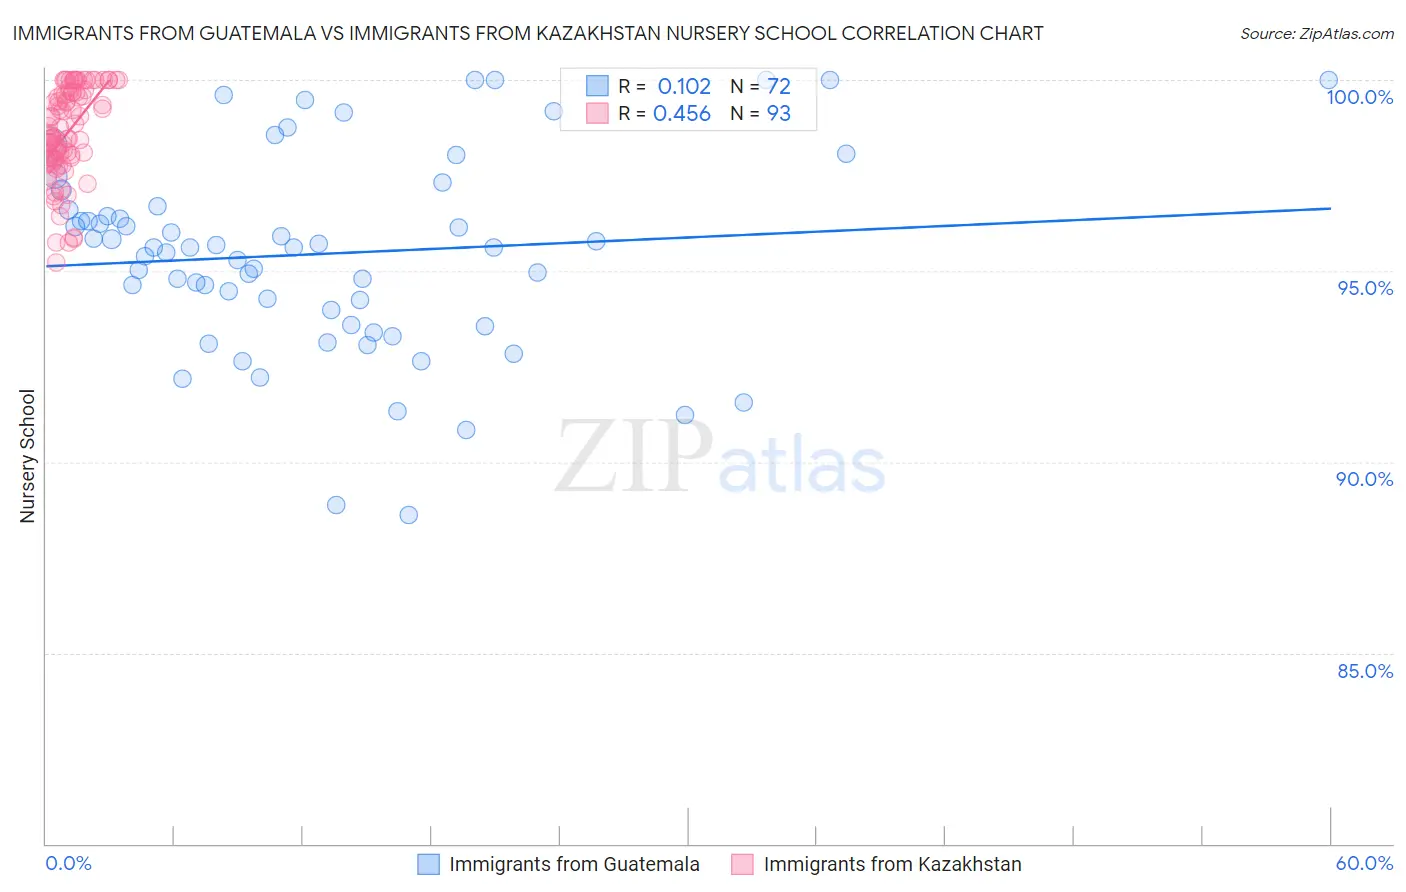 Immigrants from Guatemala vs Immigrants from Kazakhstan Nursery School